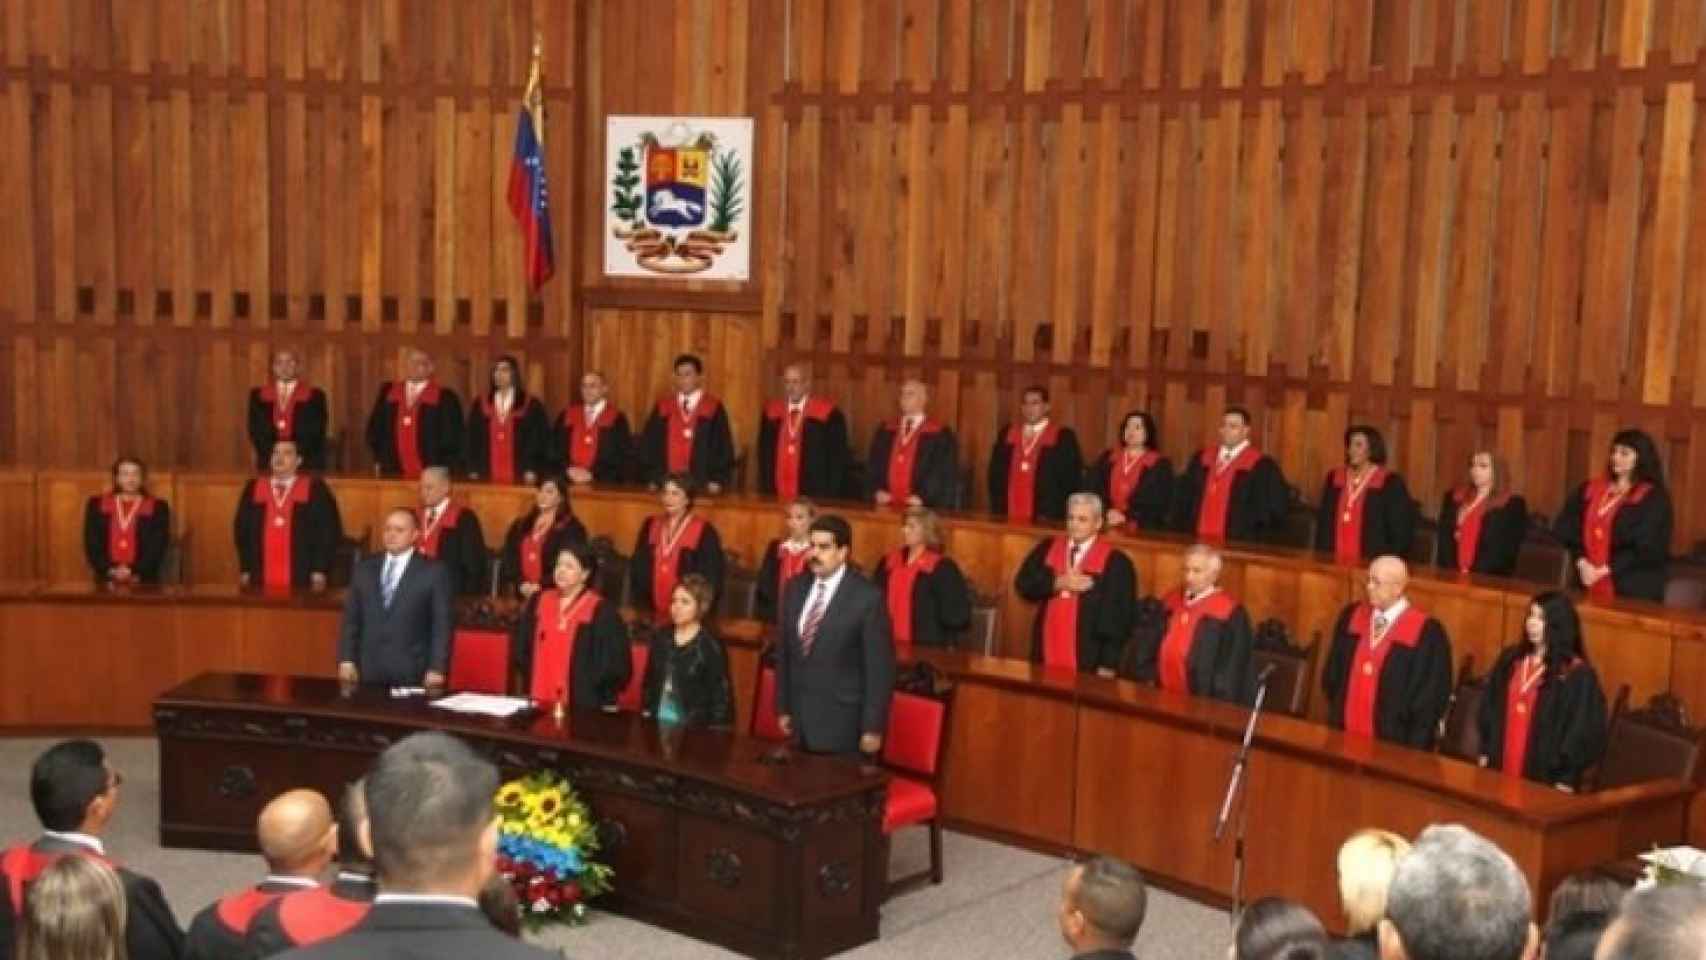 El Tribunal Supremo venezolano